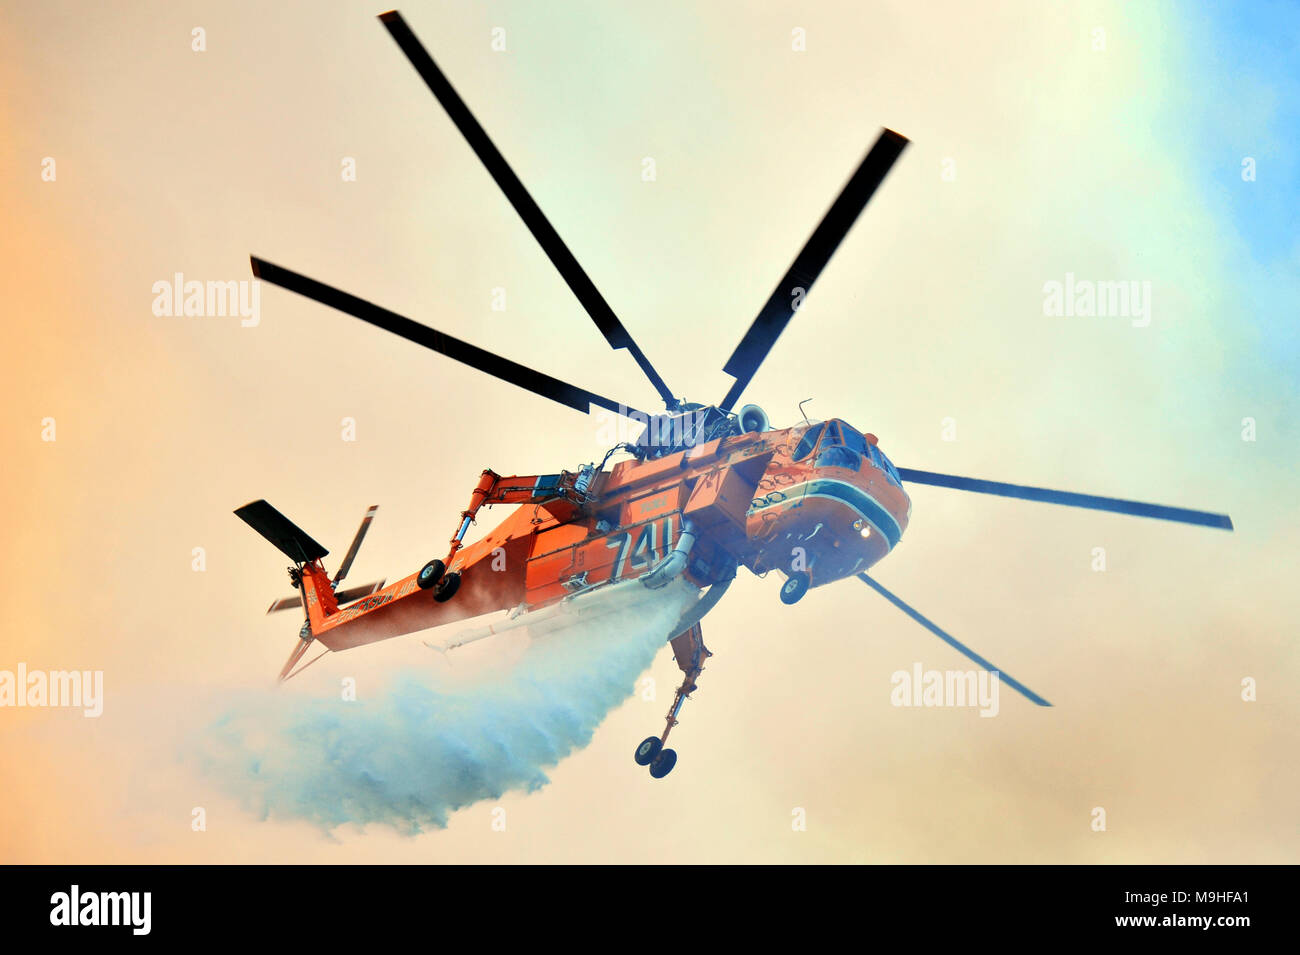 Erickson Skycrane, water bombing helicopter at work dropping retardant on a bush fire. Stock Photo